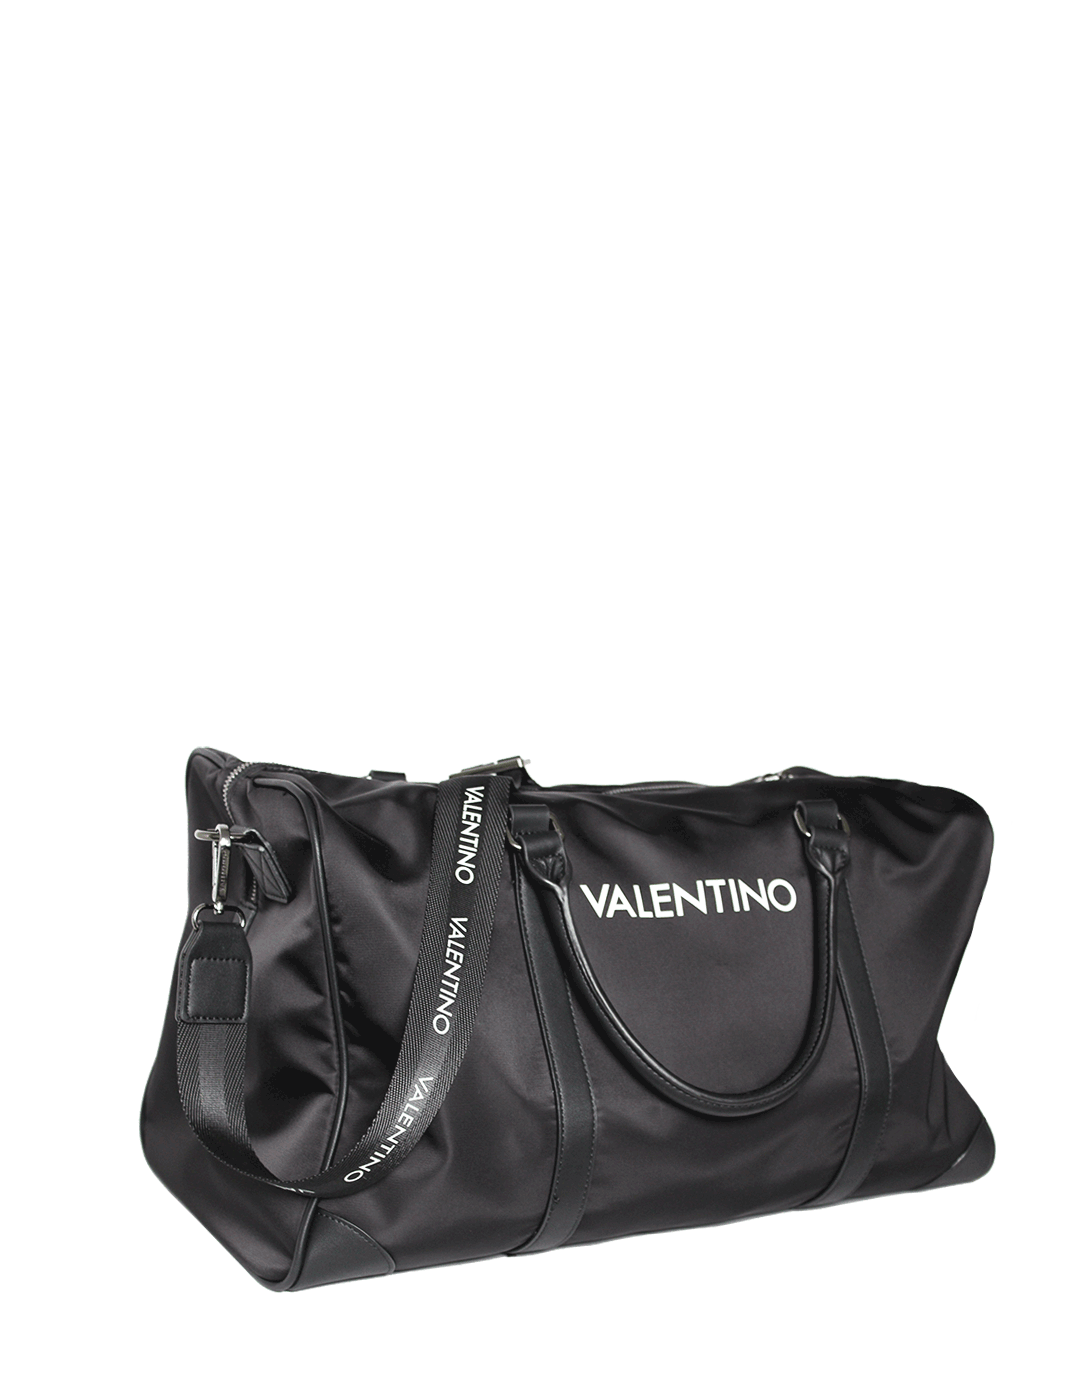 Valentino Bags, Kylo Large Logo Flight Bag, Flight Bags